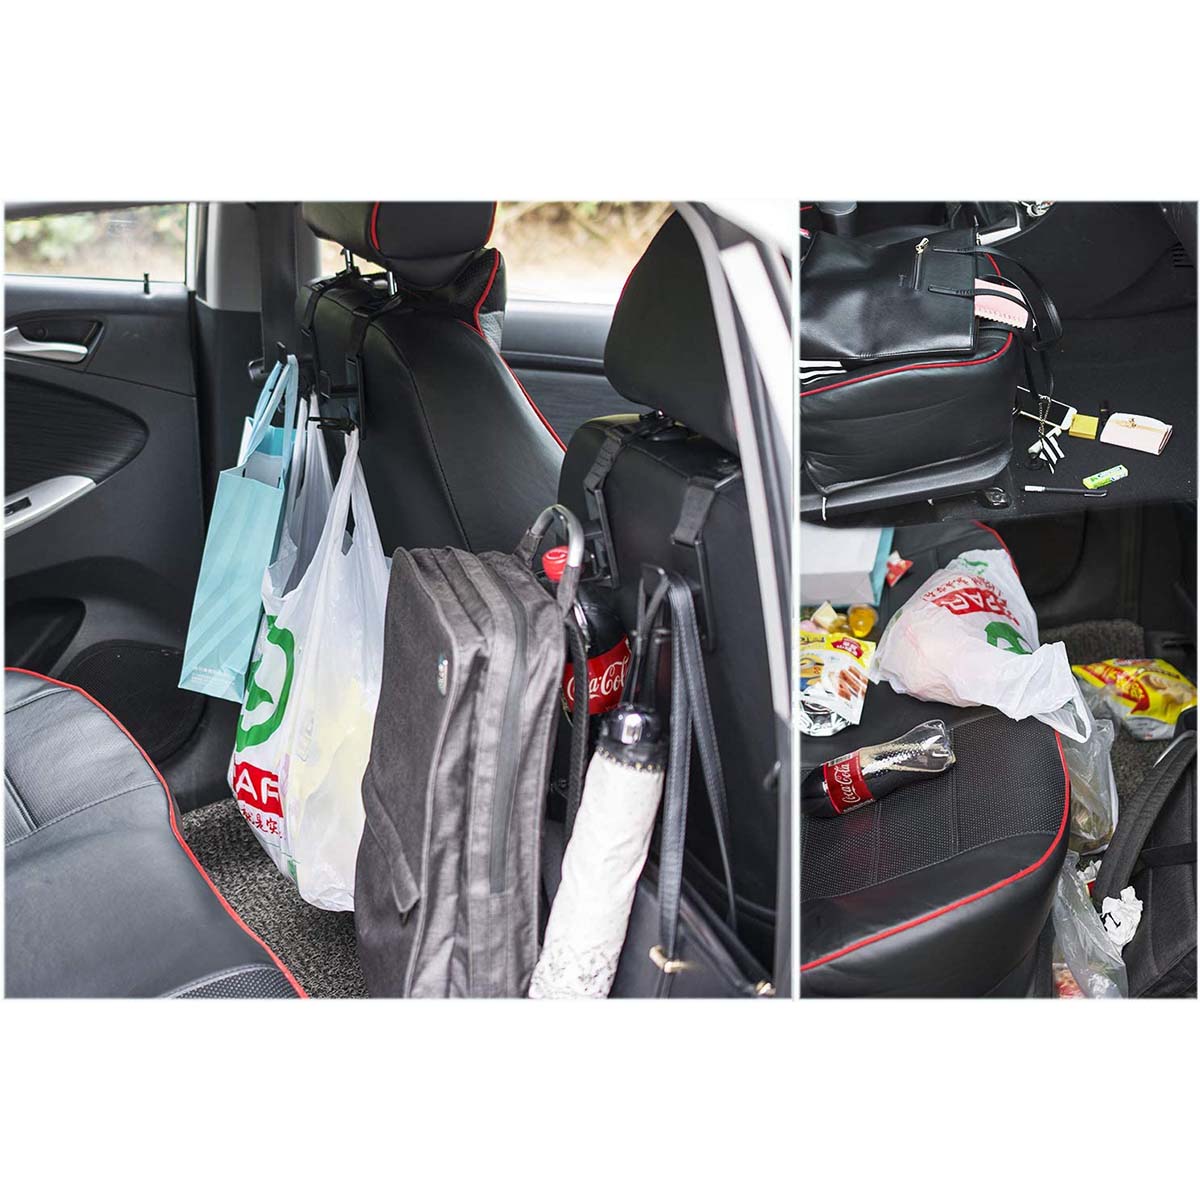 Magic Headrest Hooks, Purse Hanger Headrest Hook Holder for Car Seat Organizer Behind Over the Seat Hook Hang Purse or Bags